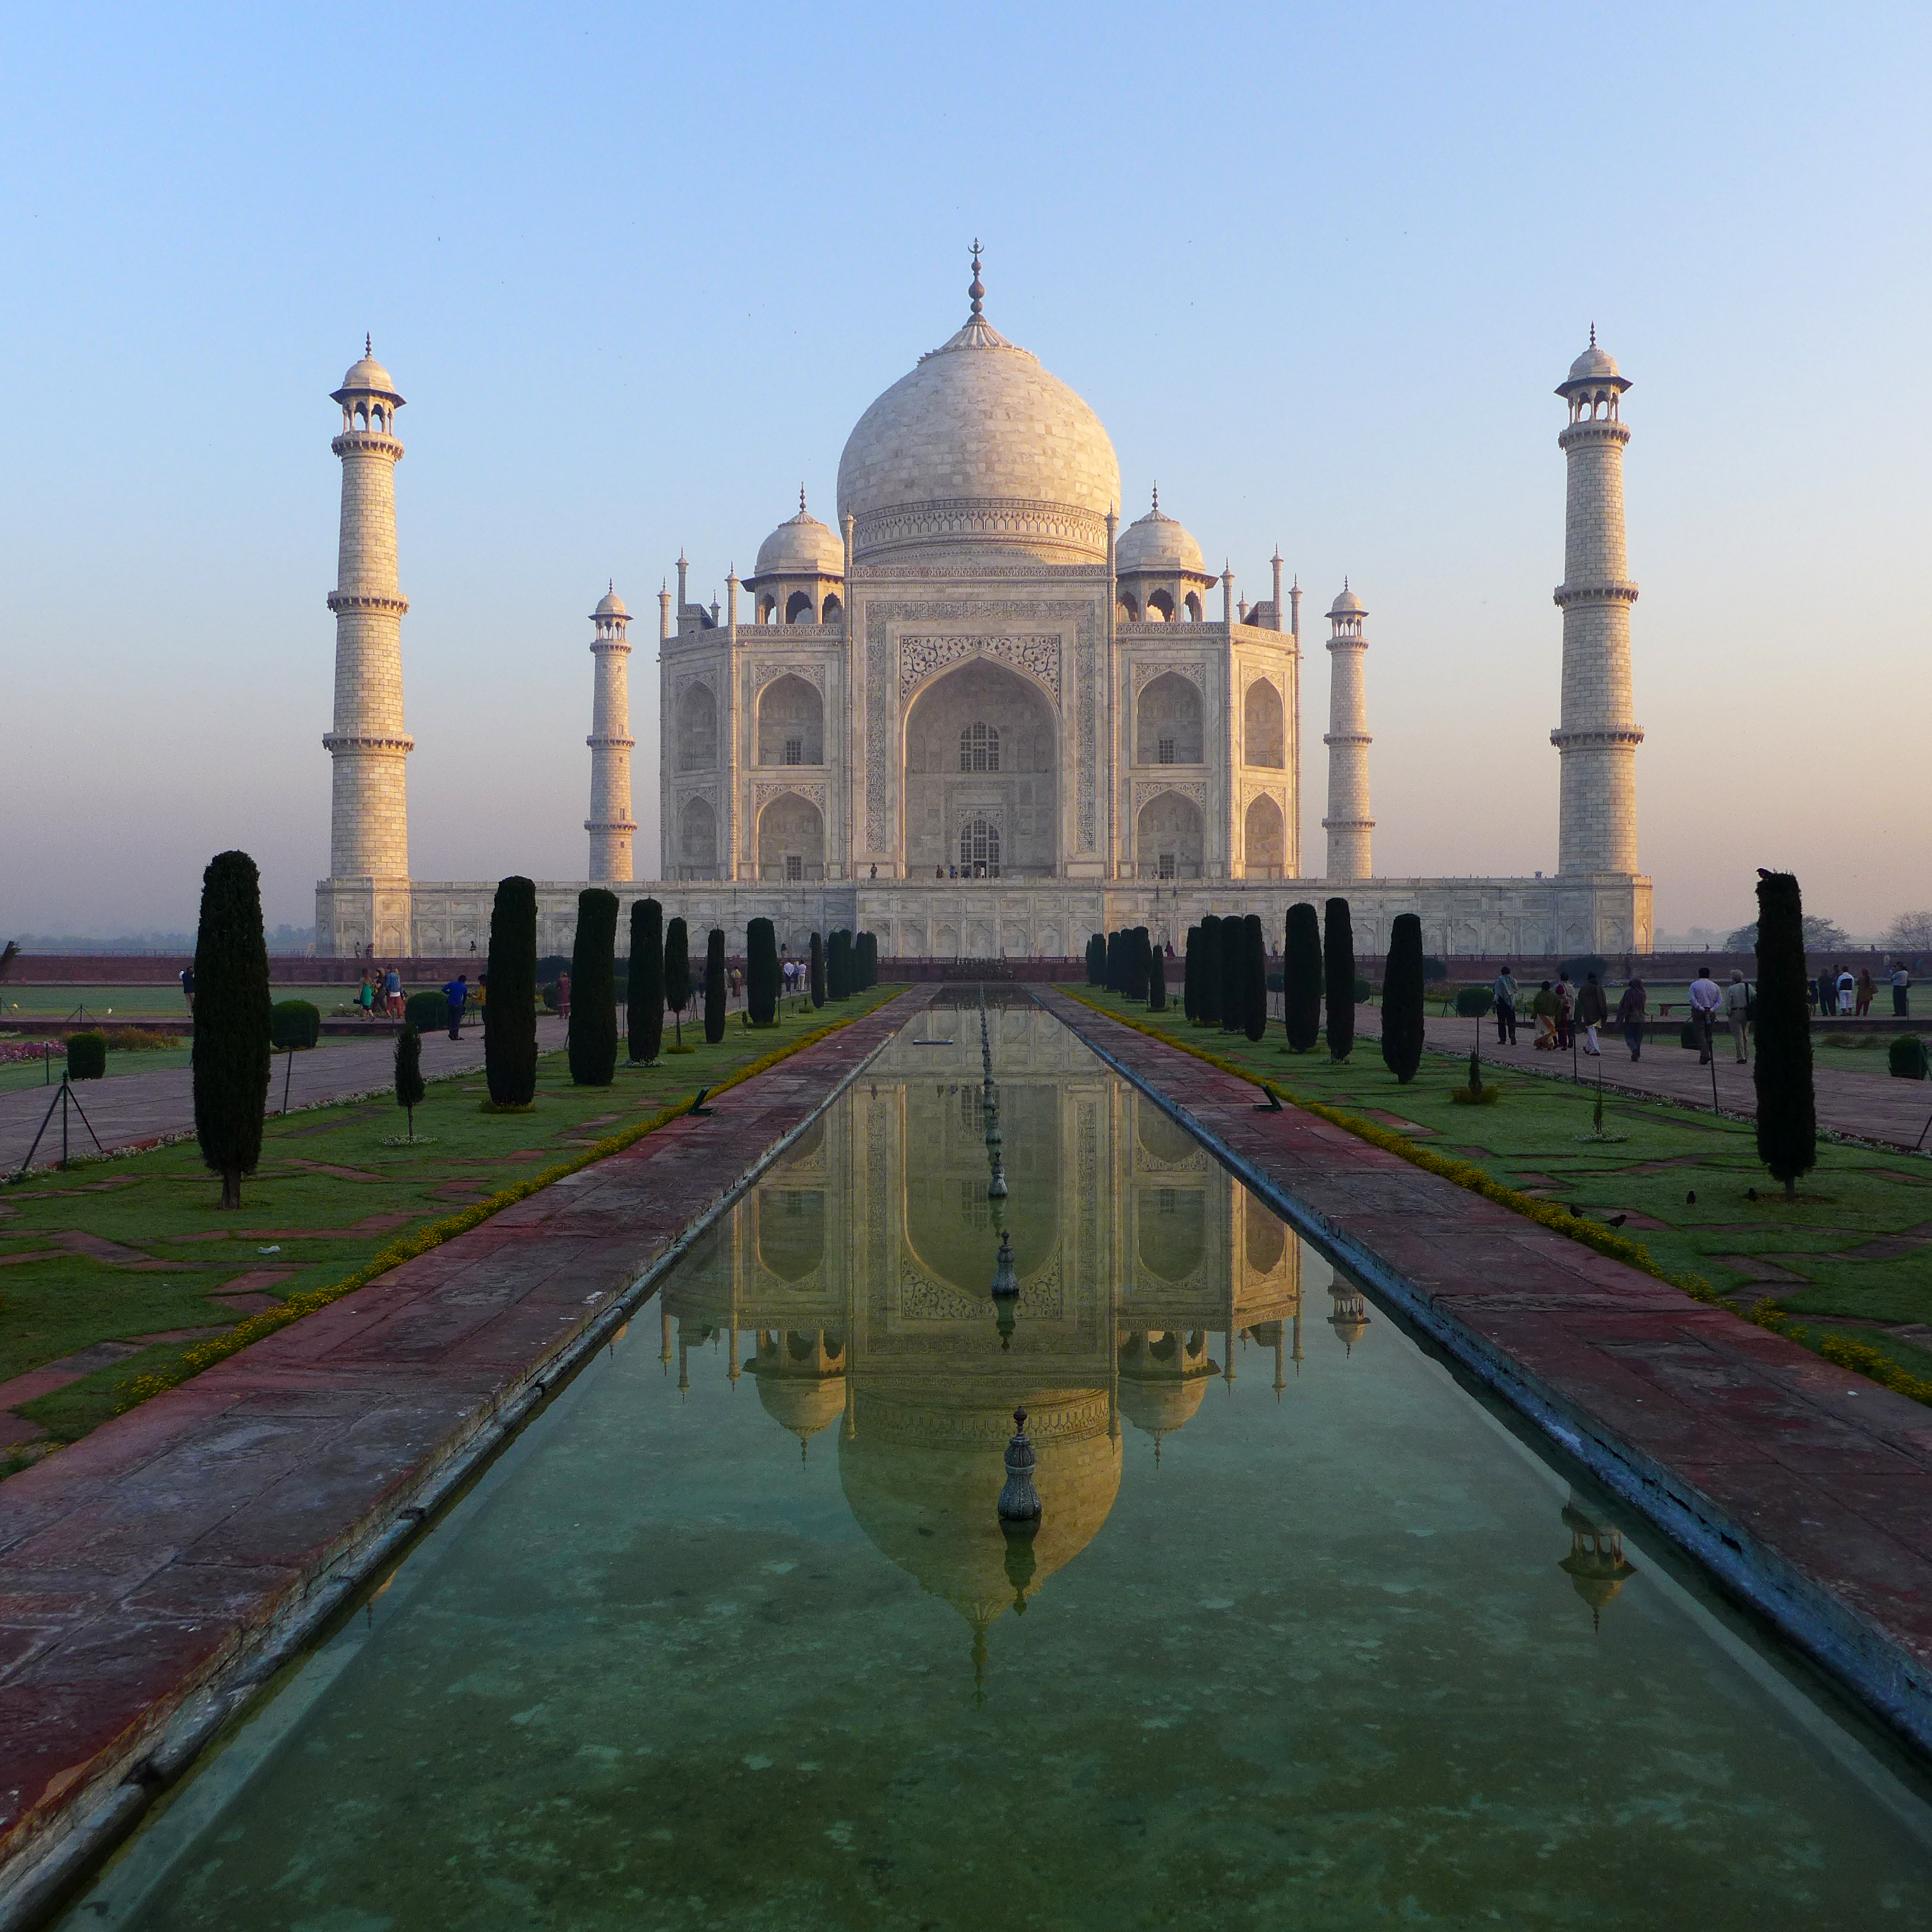 I call this one my "post card" shot of the Taj Mahal. 